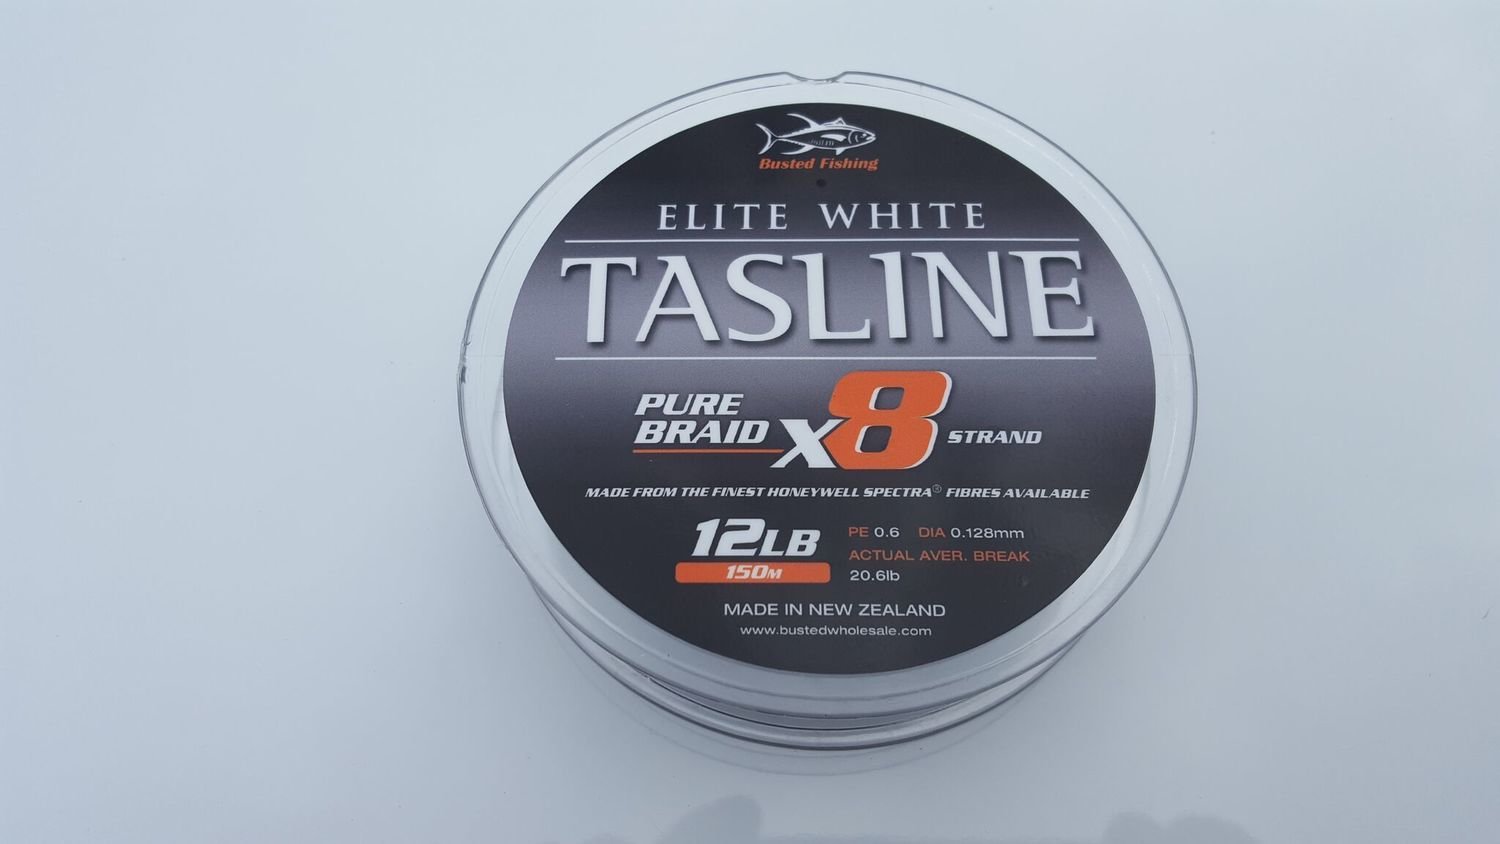 Tasline Elite White 150M Braided Fishing Line